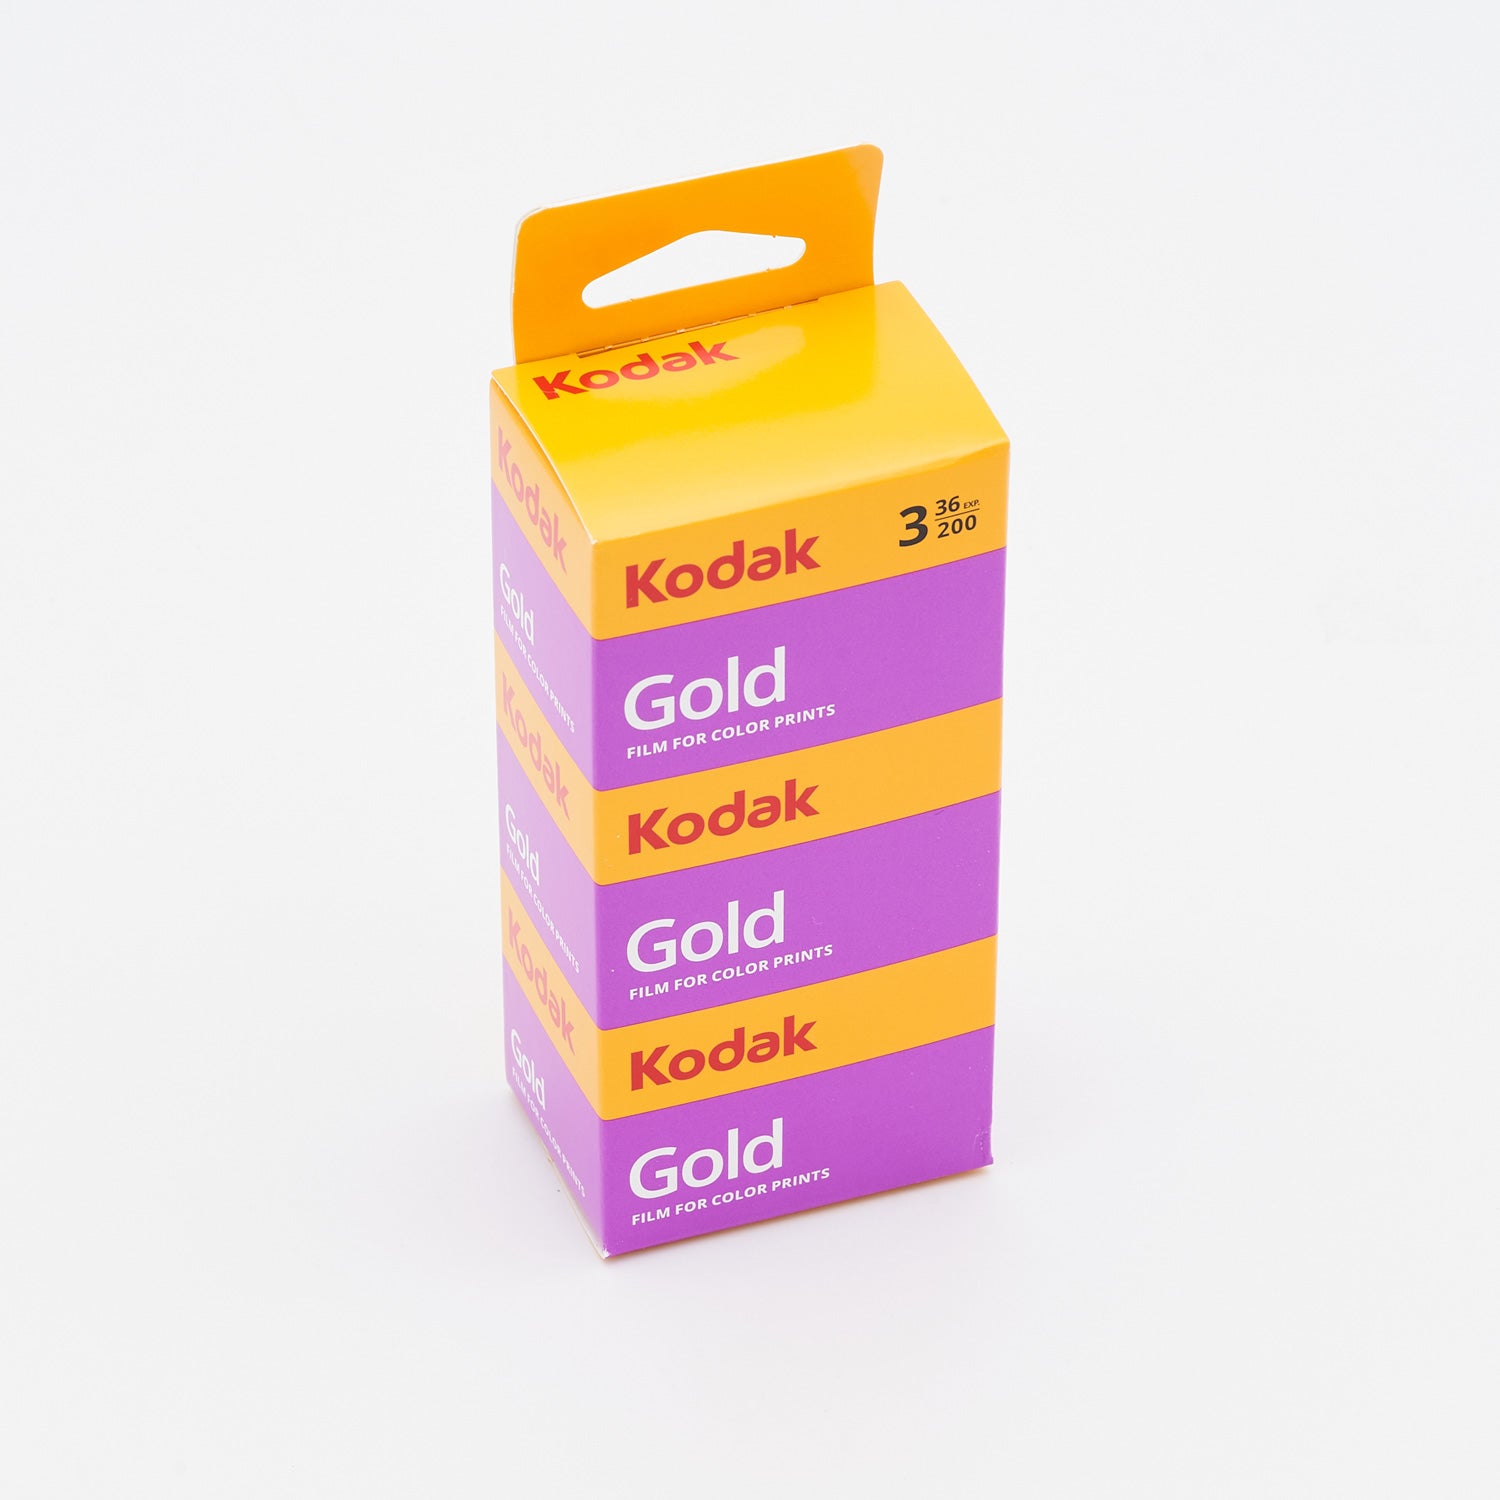 Kodak Gold Farb-Negativfilm 135-36 (Kleinbild), 3er-Pack